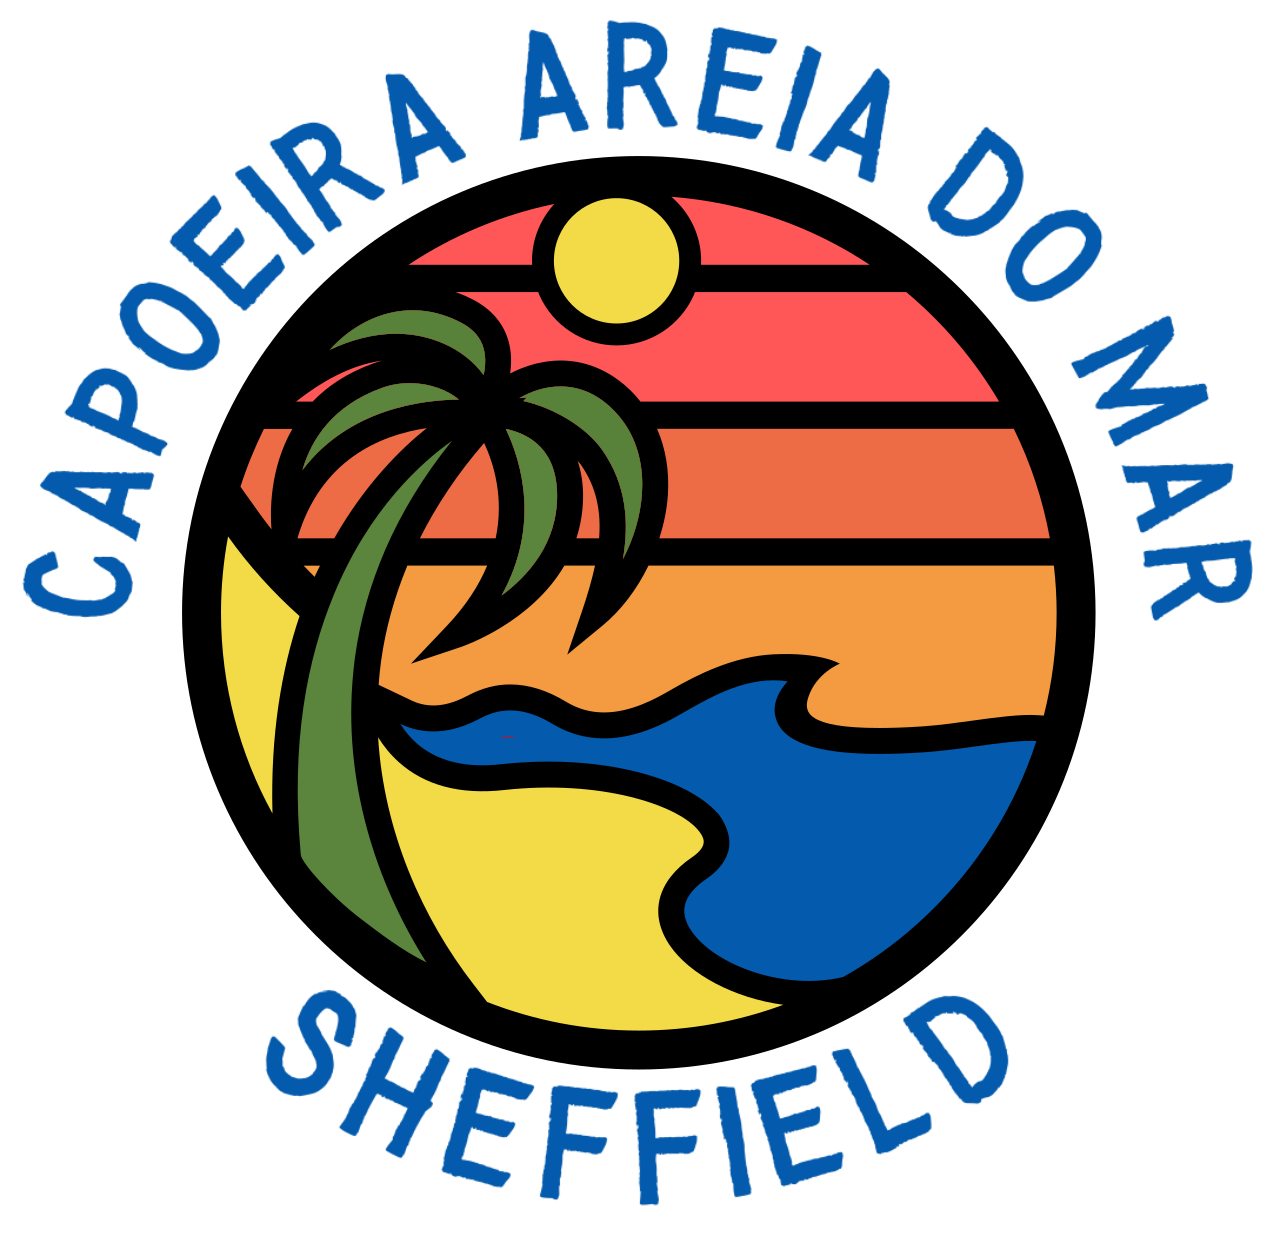 Capoeira Angola Sheffield